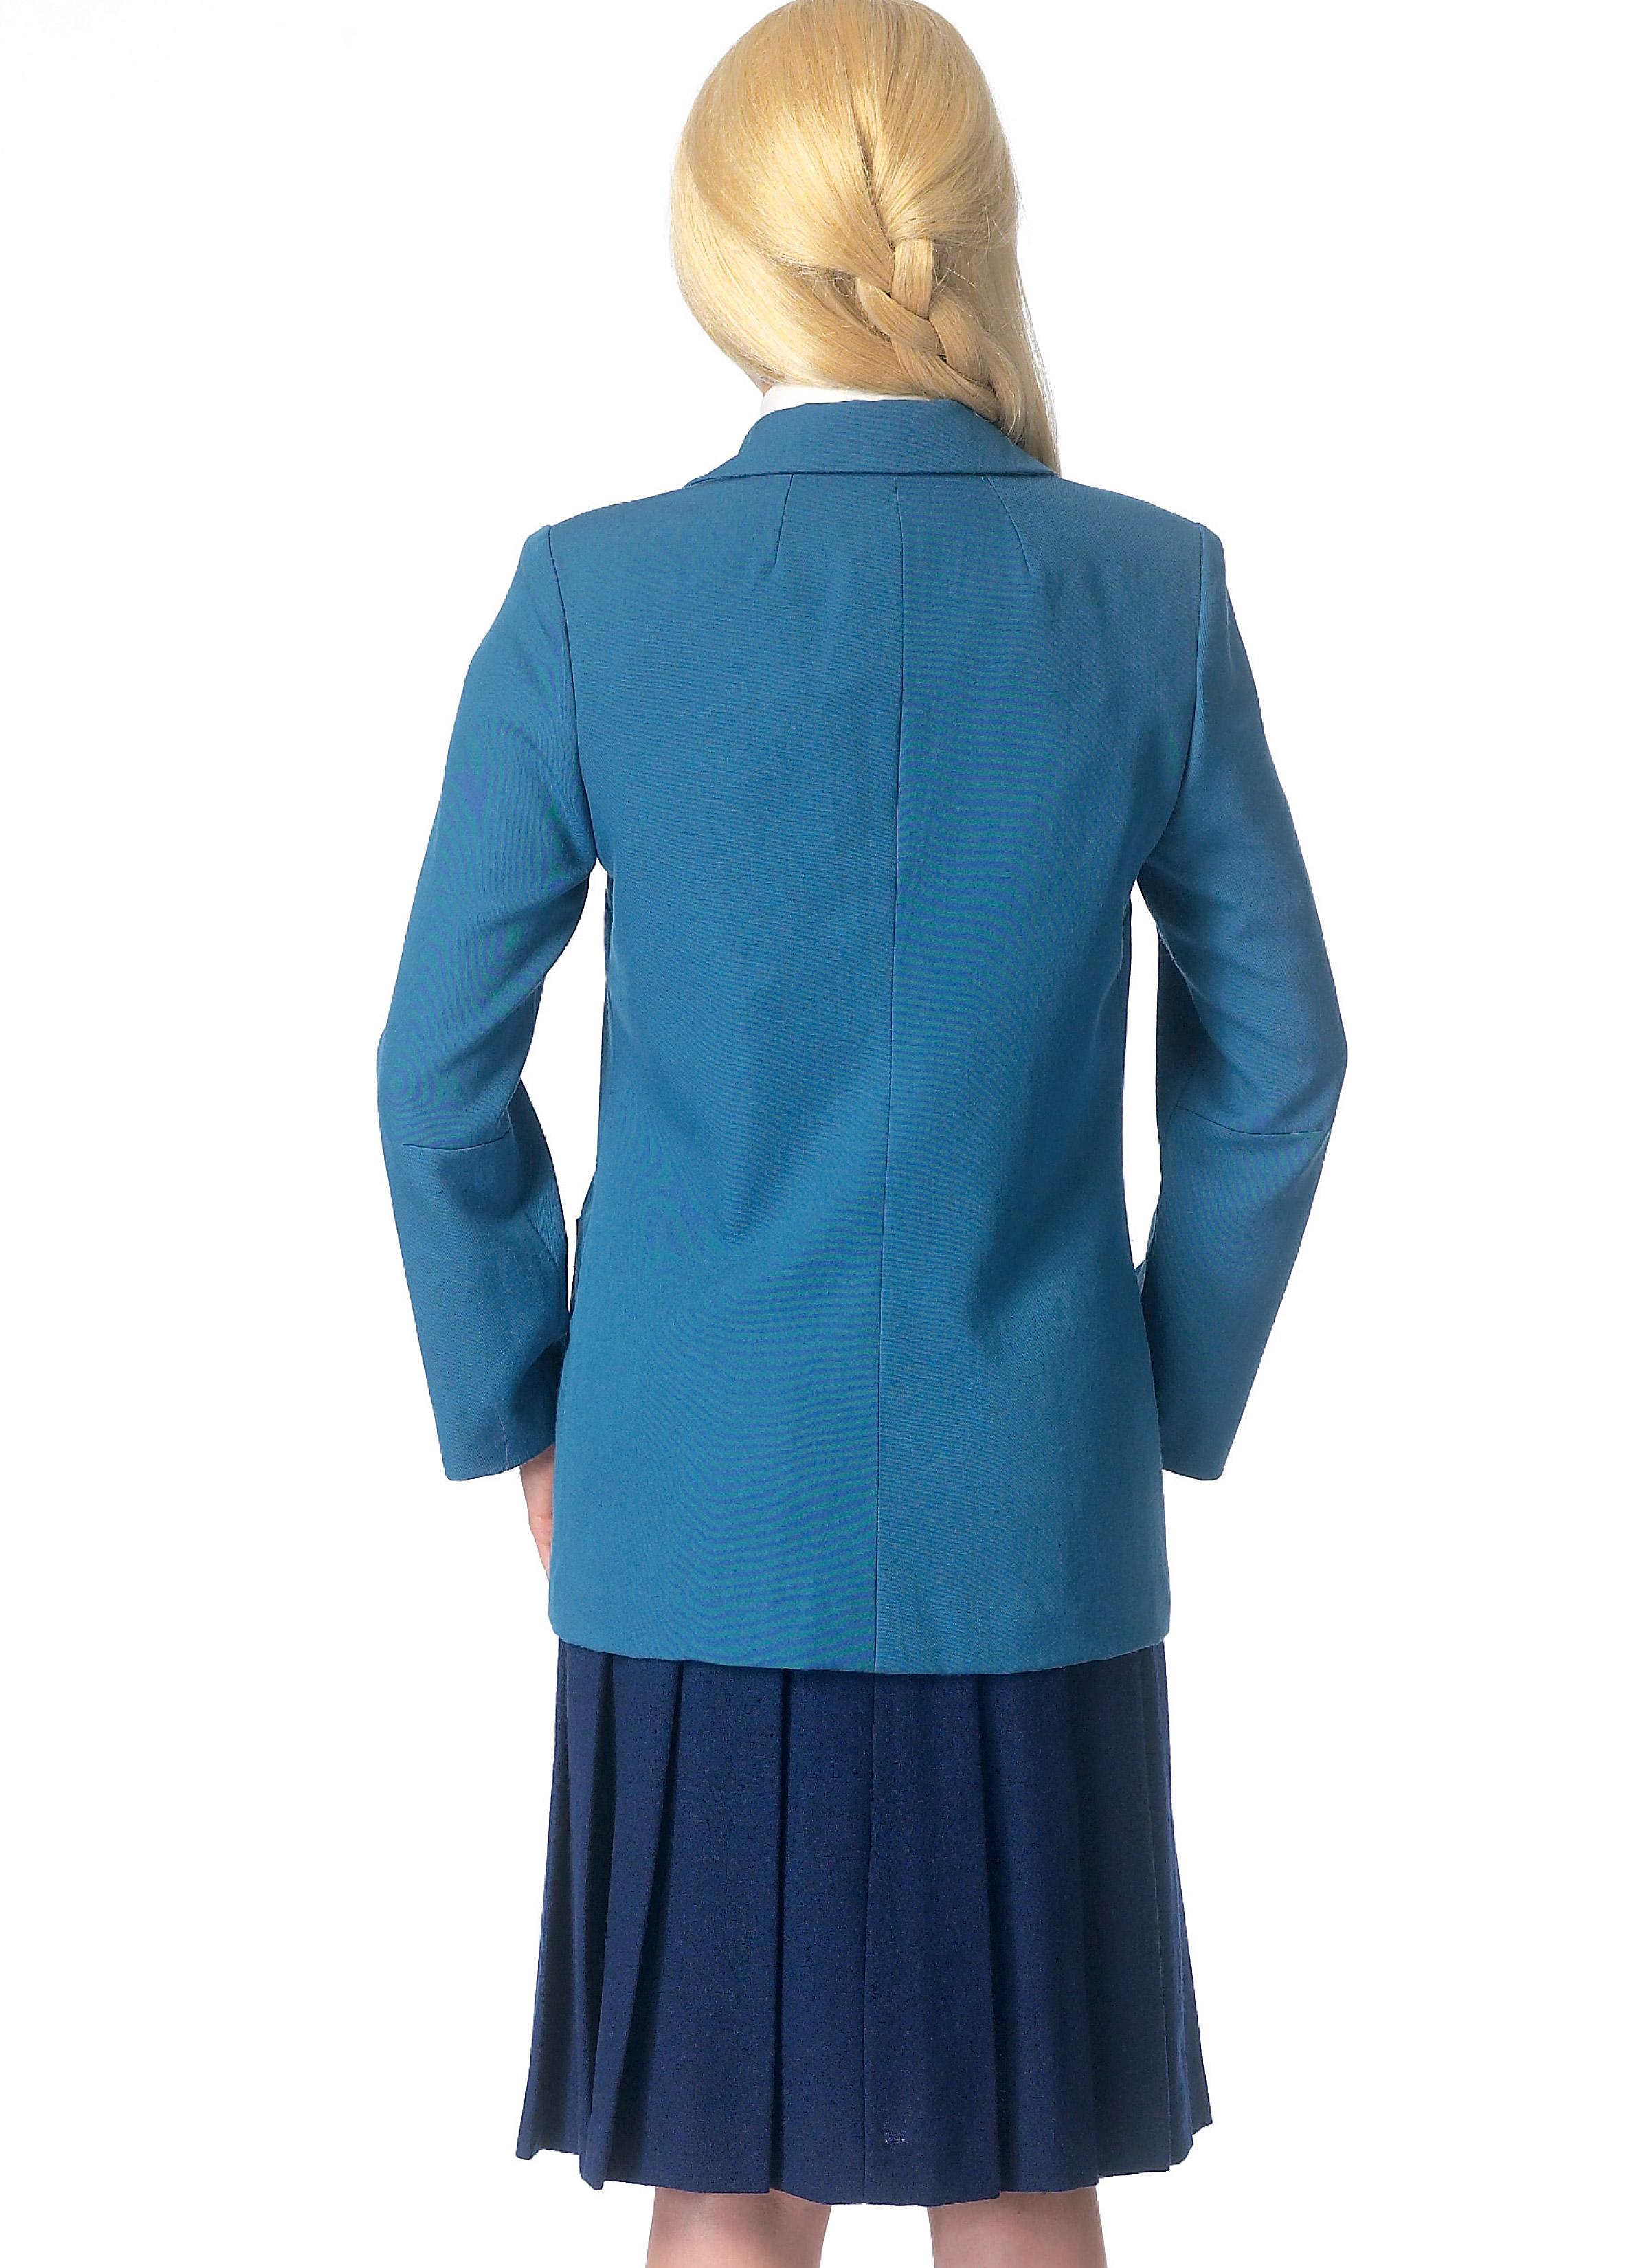 McCalls M7141 Coordinates, Costumes, Jackets, Skirts, Bustles & Petticoats, Tops, Shirts & Tunics, Vests